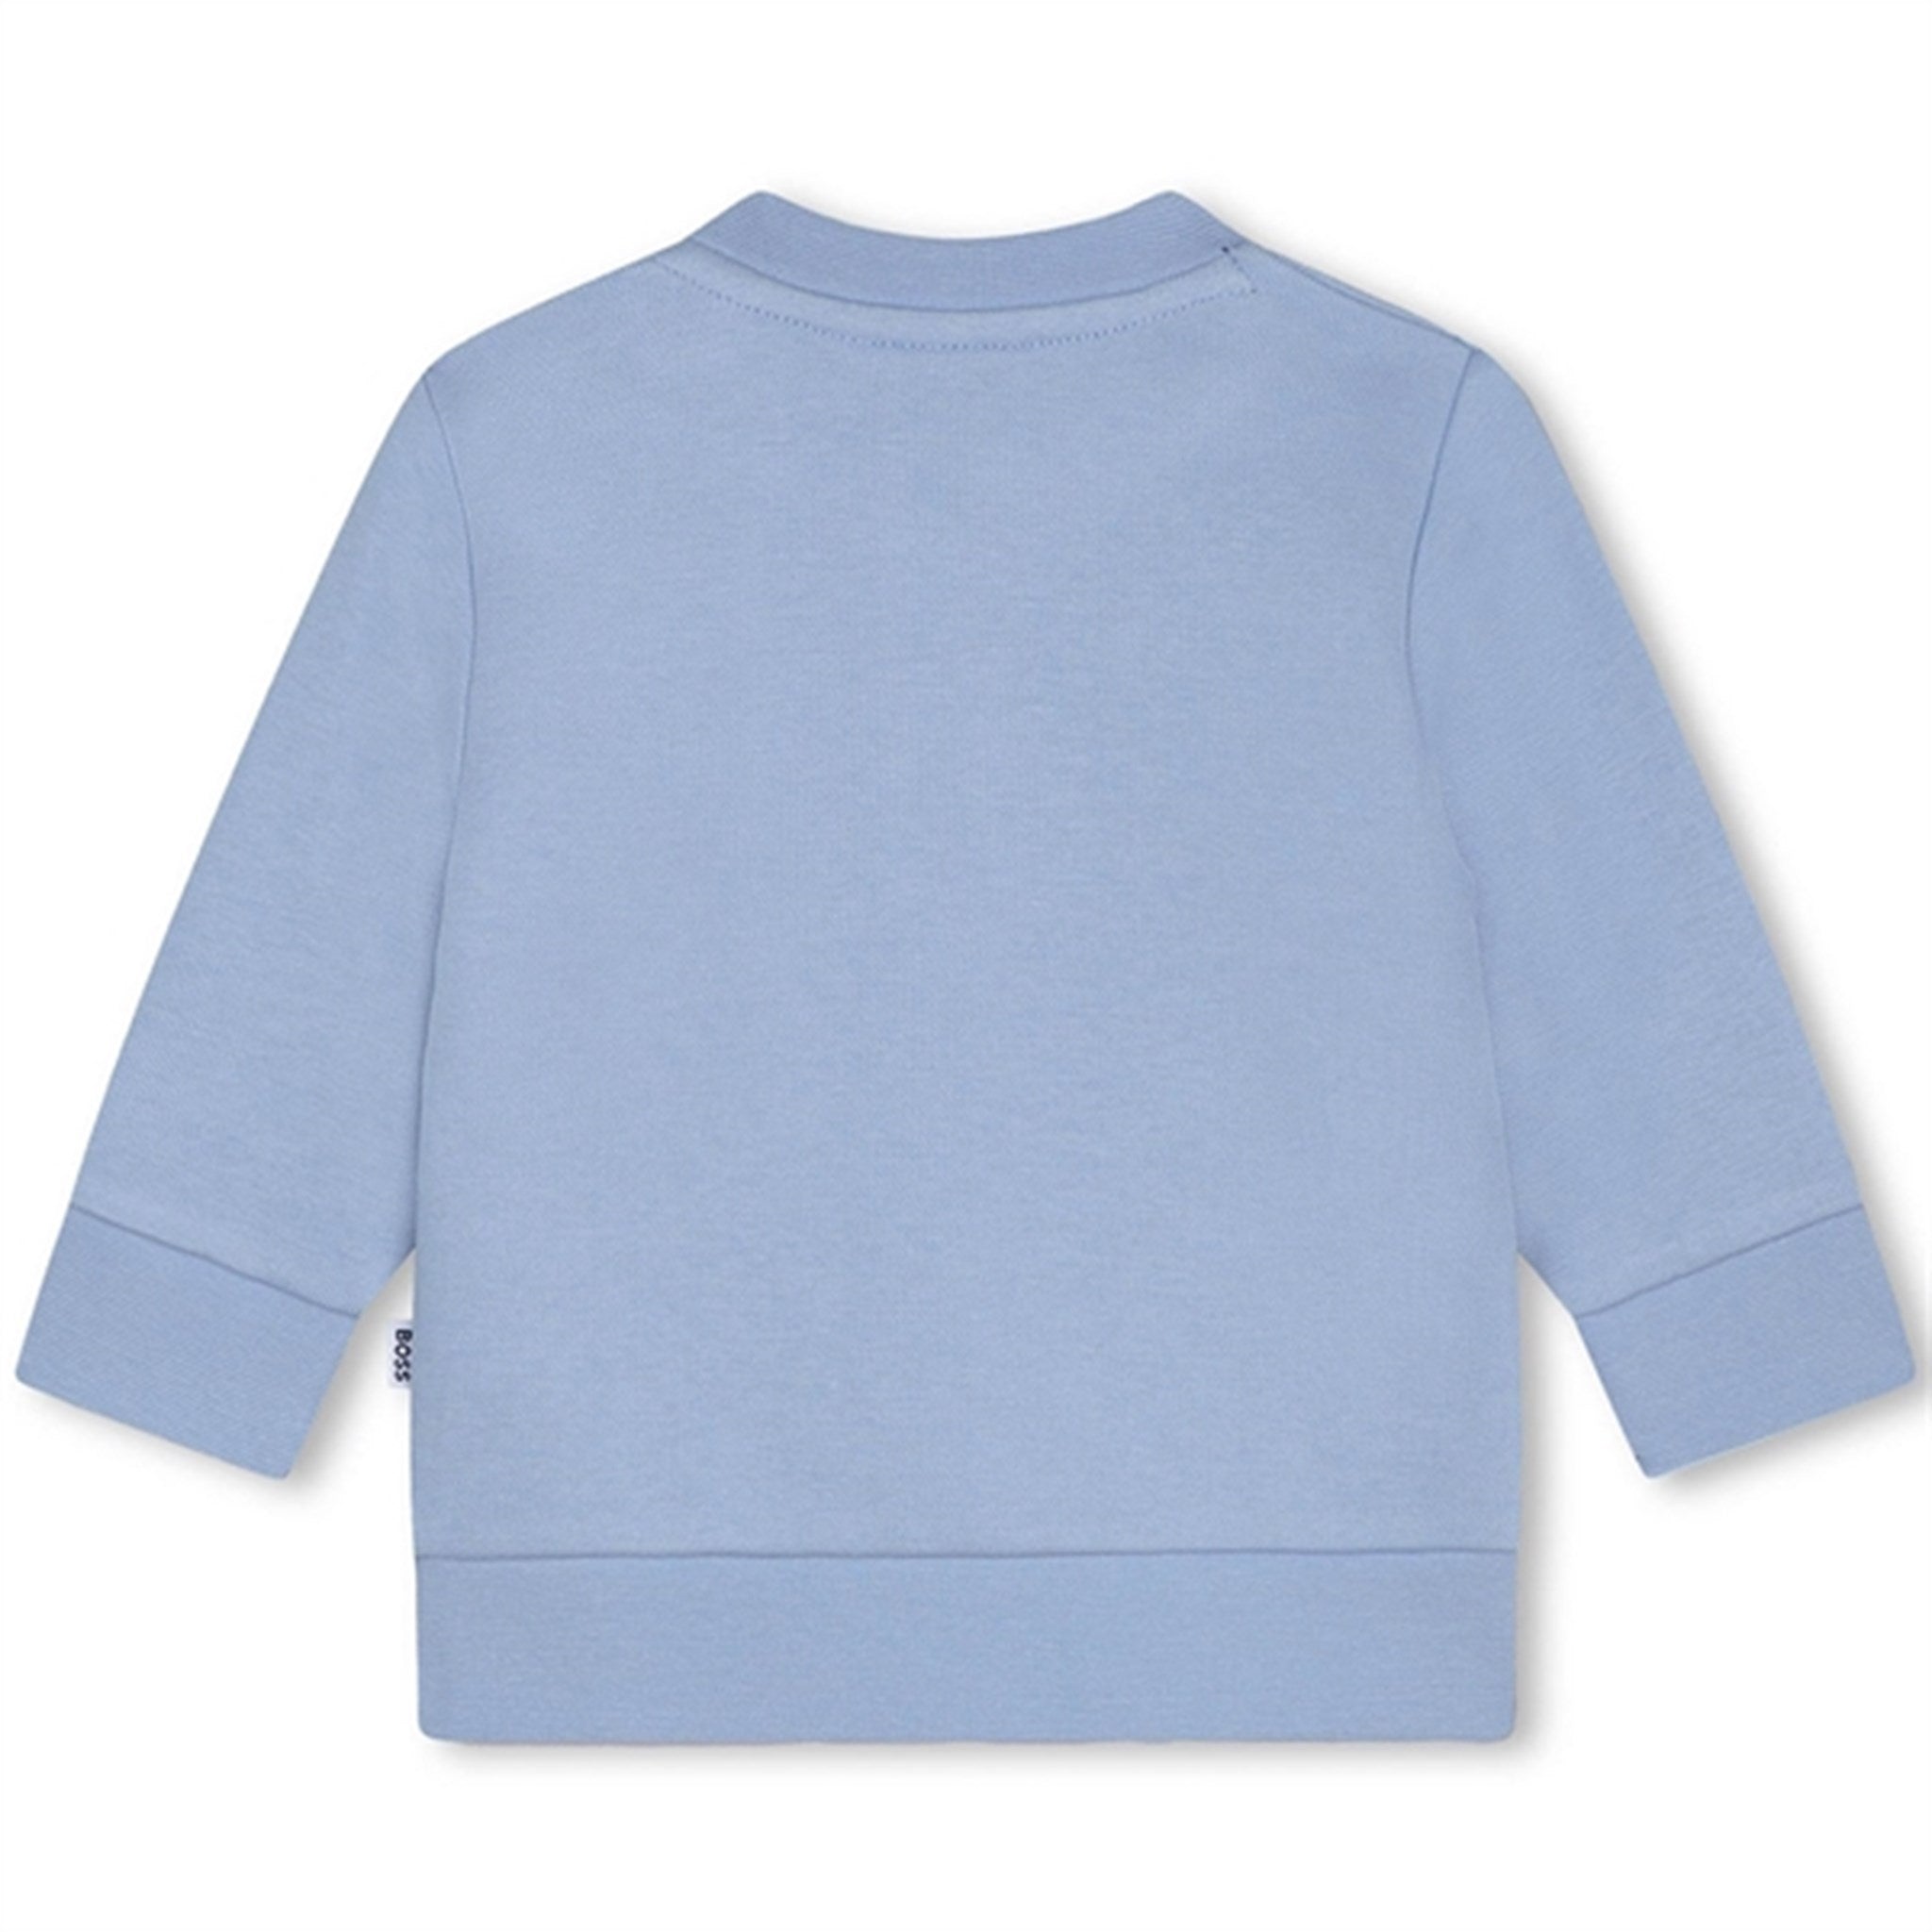 Hugo Boss Pale Blue Sweatshirt 2